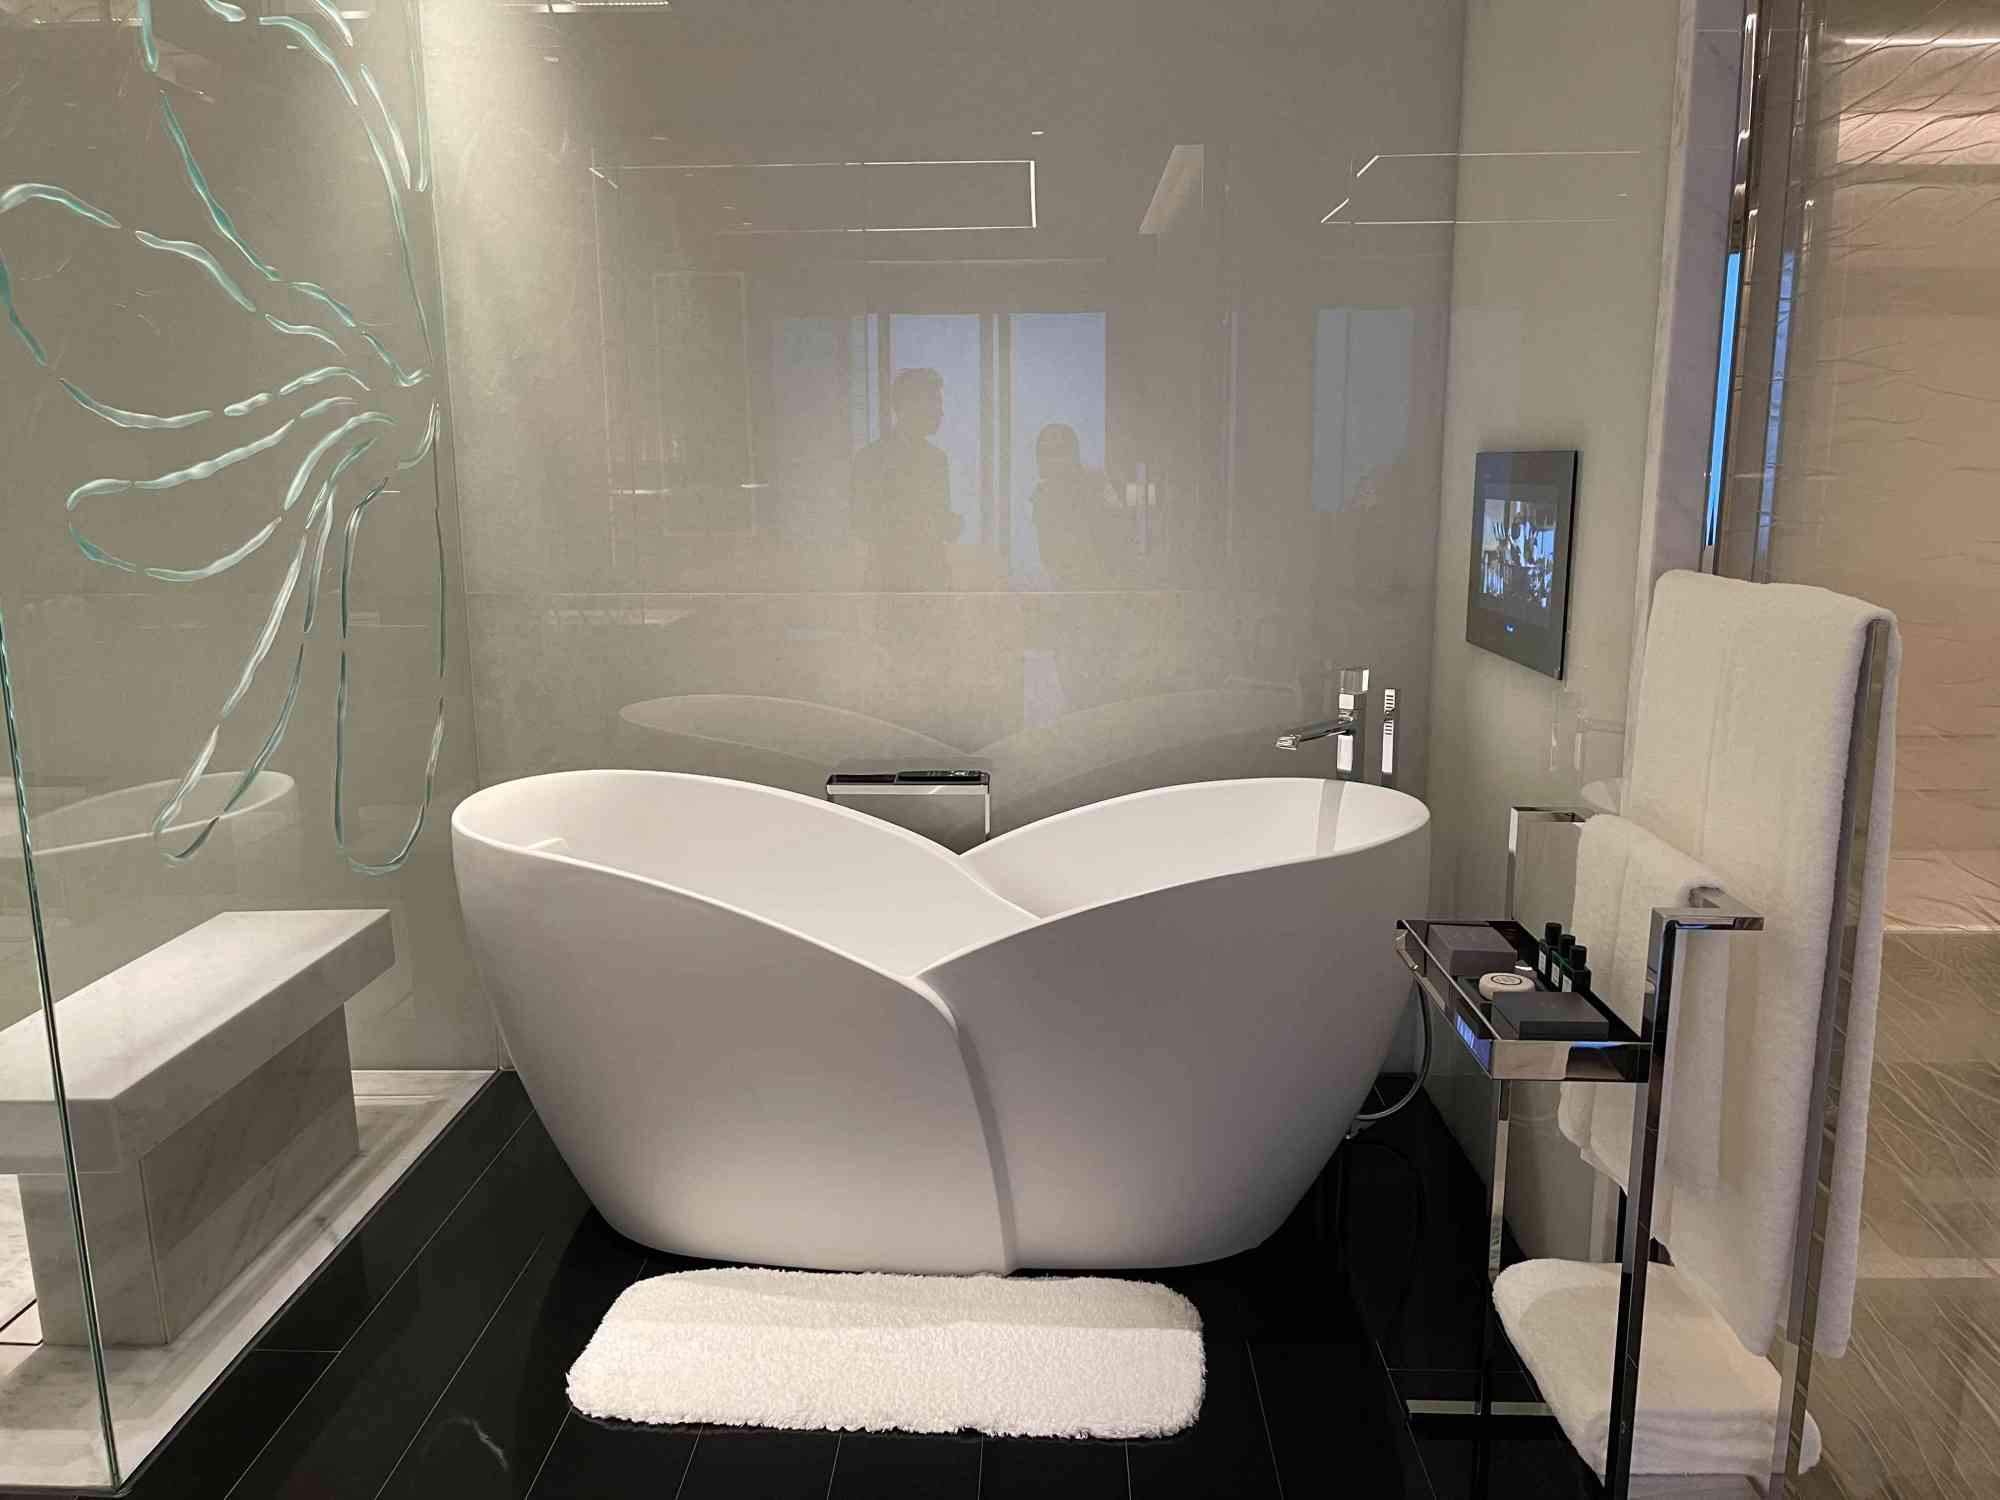 j酒店玉兰花形状的浴缸 拍摄:薛冰冰